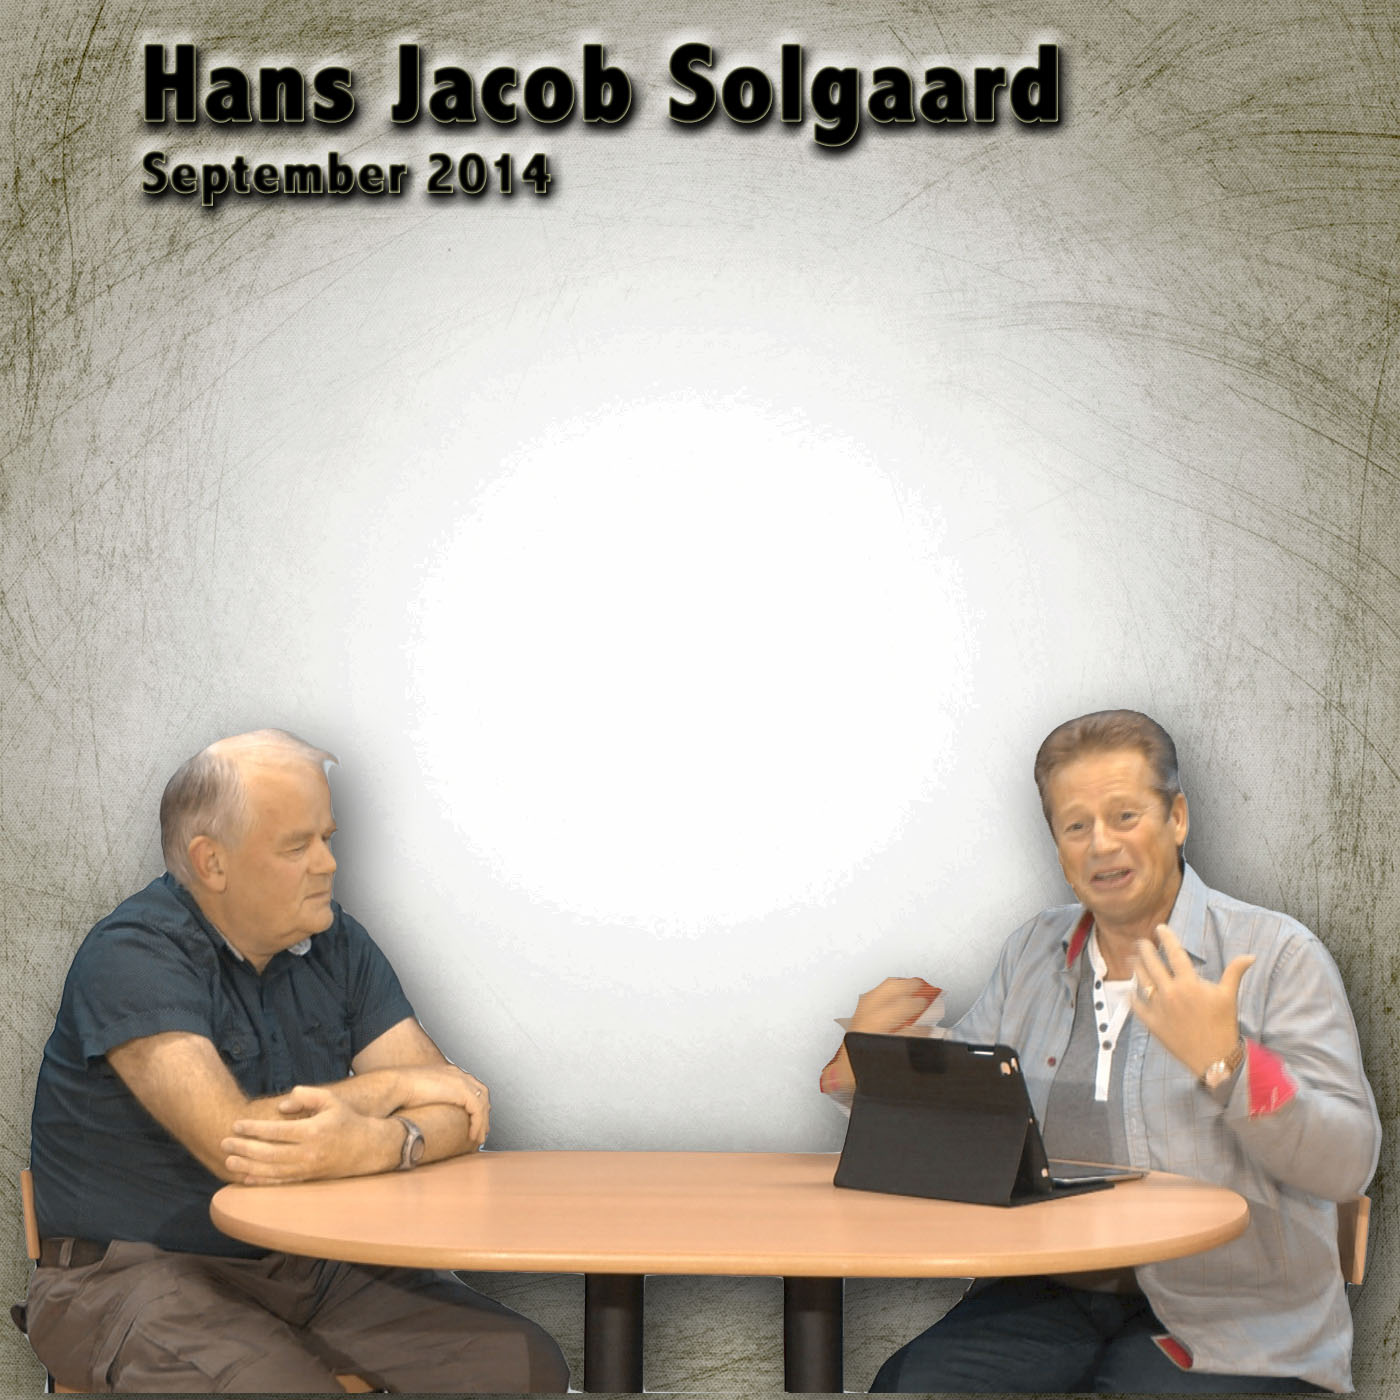 Hans Jacob Solgaard